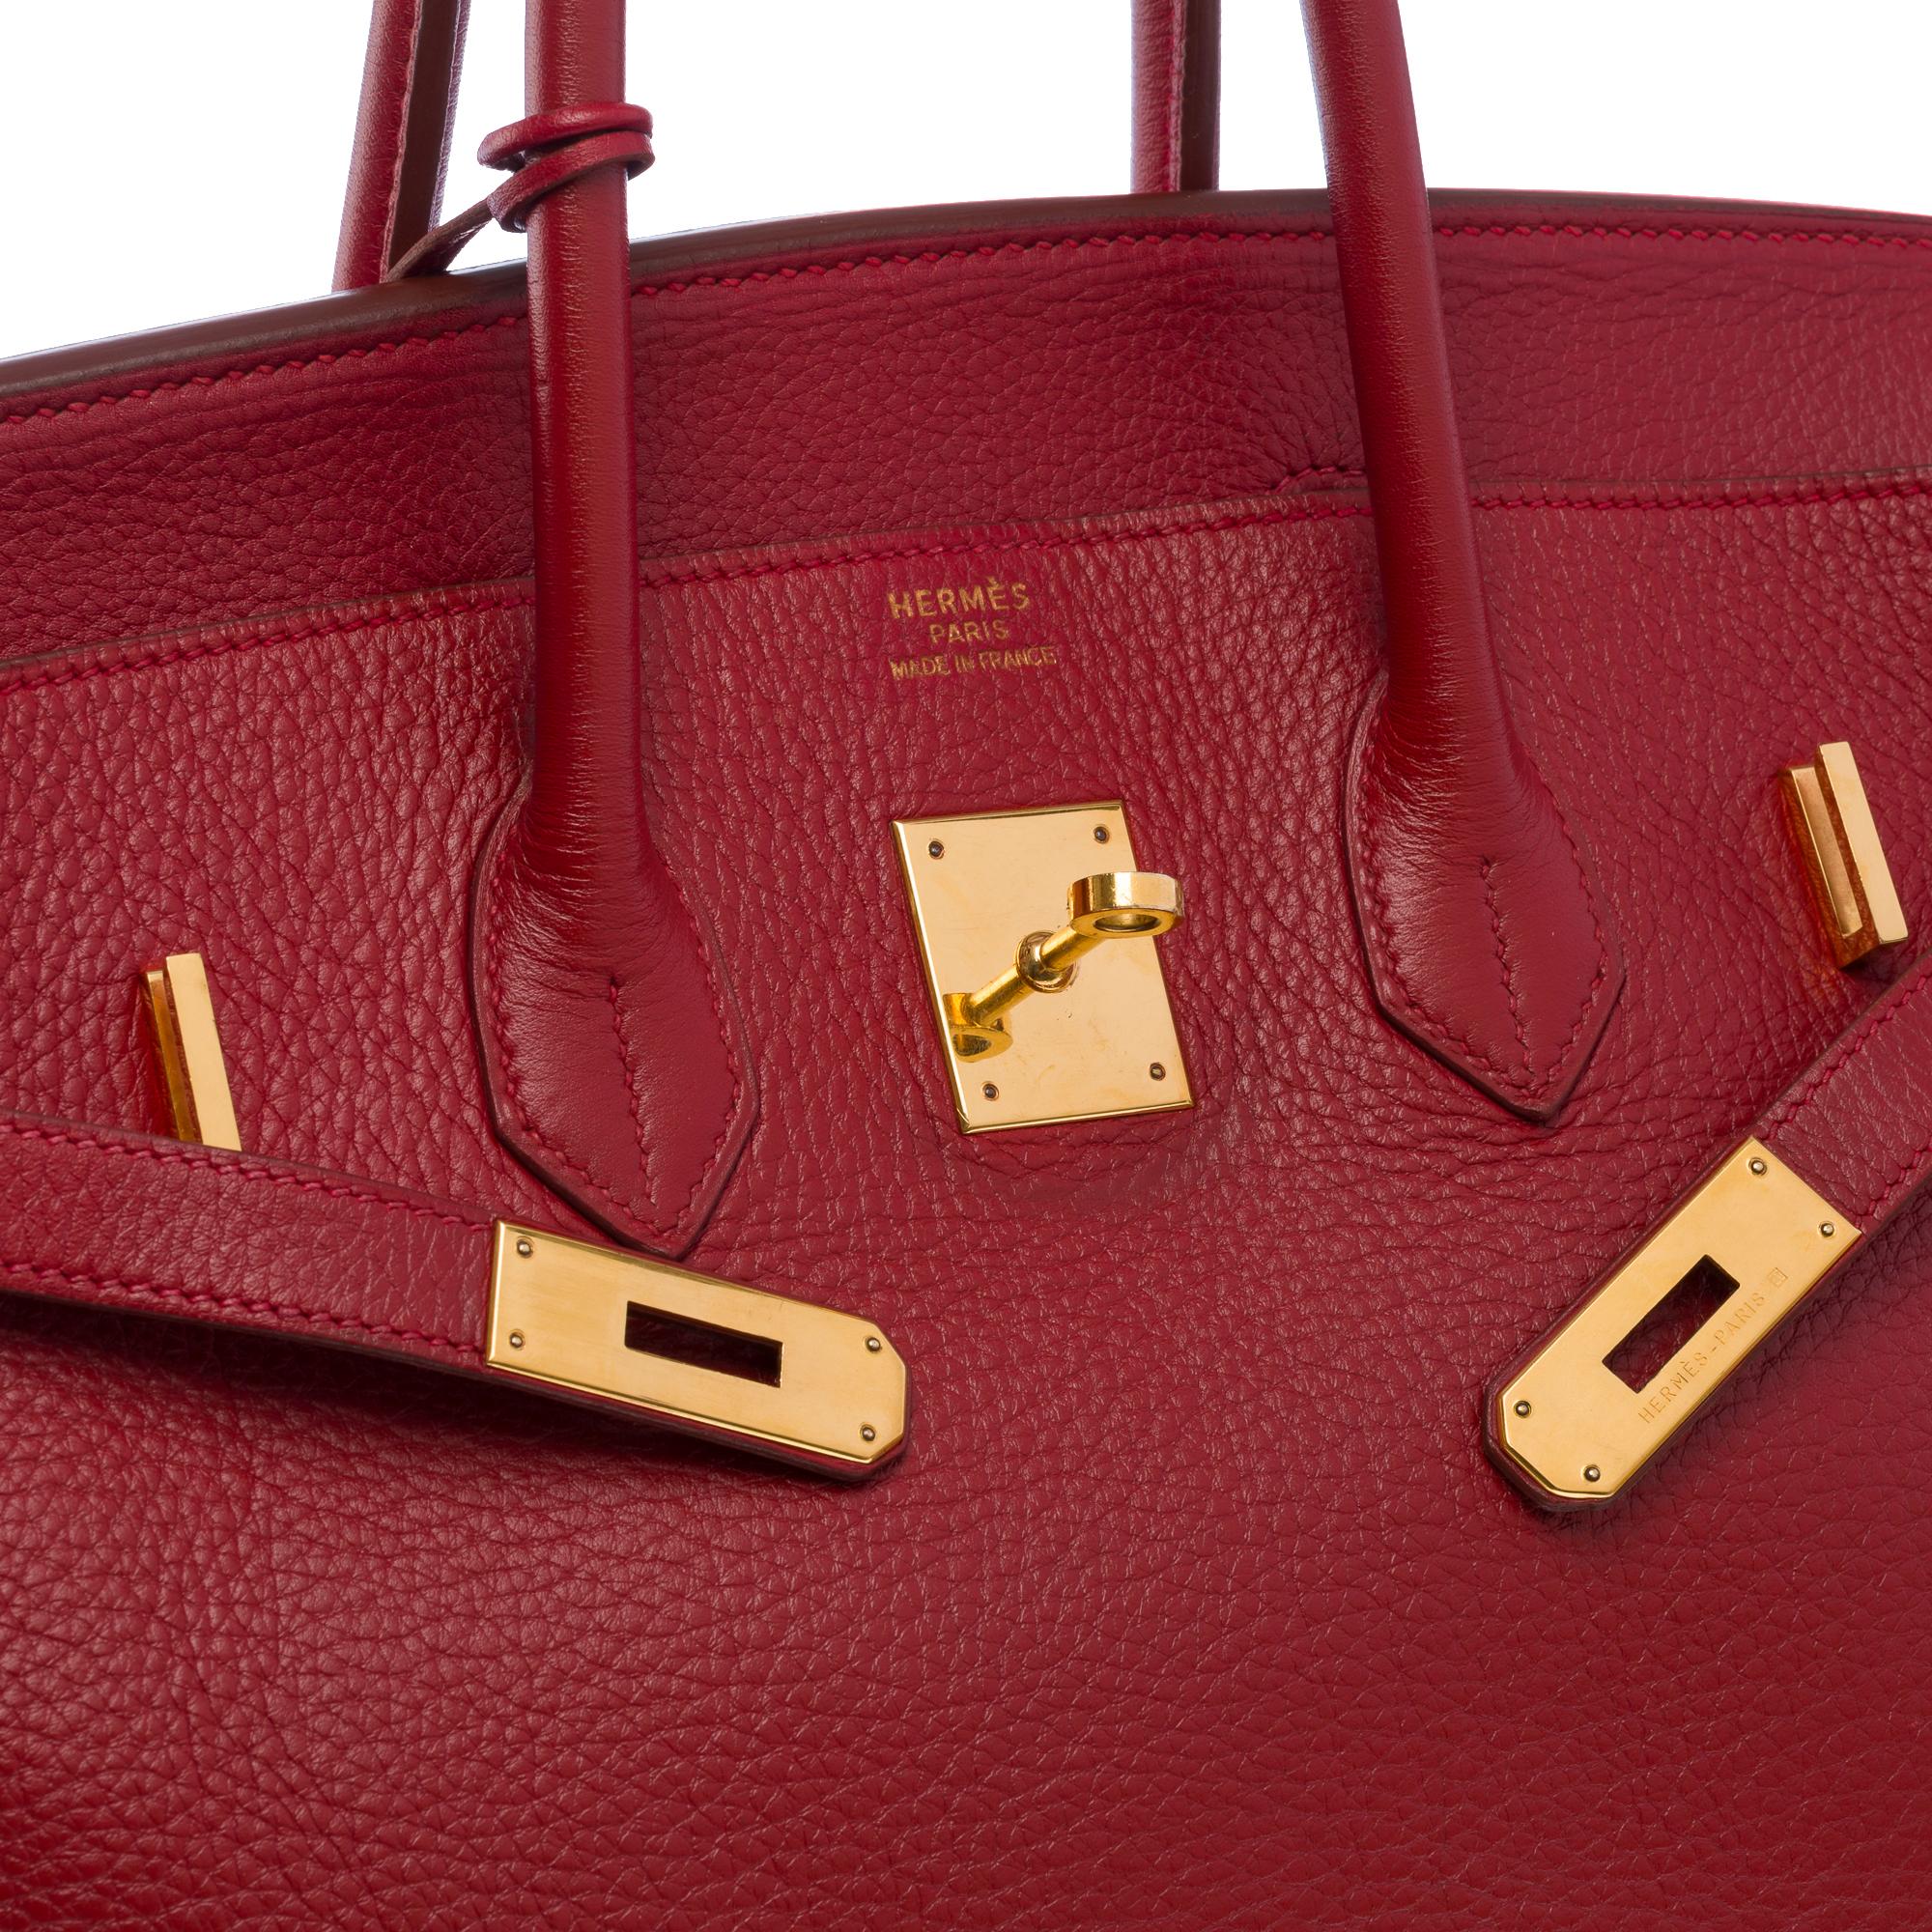 Stunning Hermès Birkin 35 handbag in Rouge Garance Togo leather, GHW For Sale 1